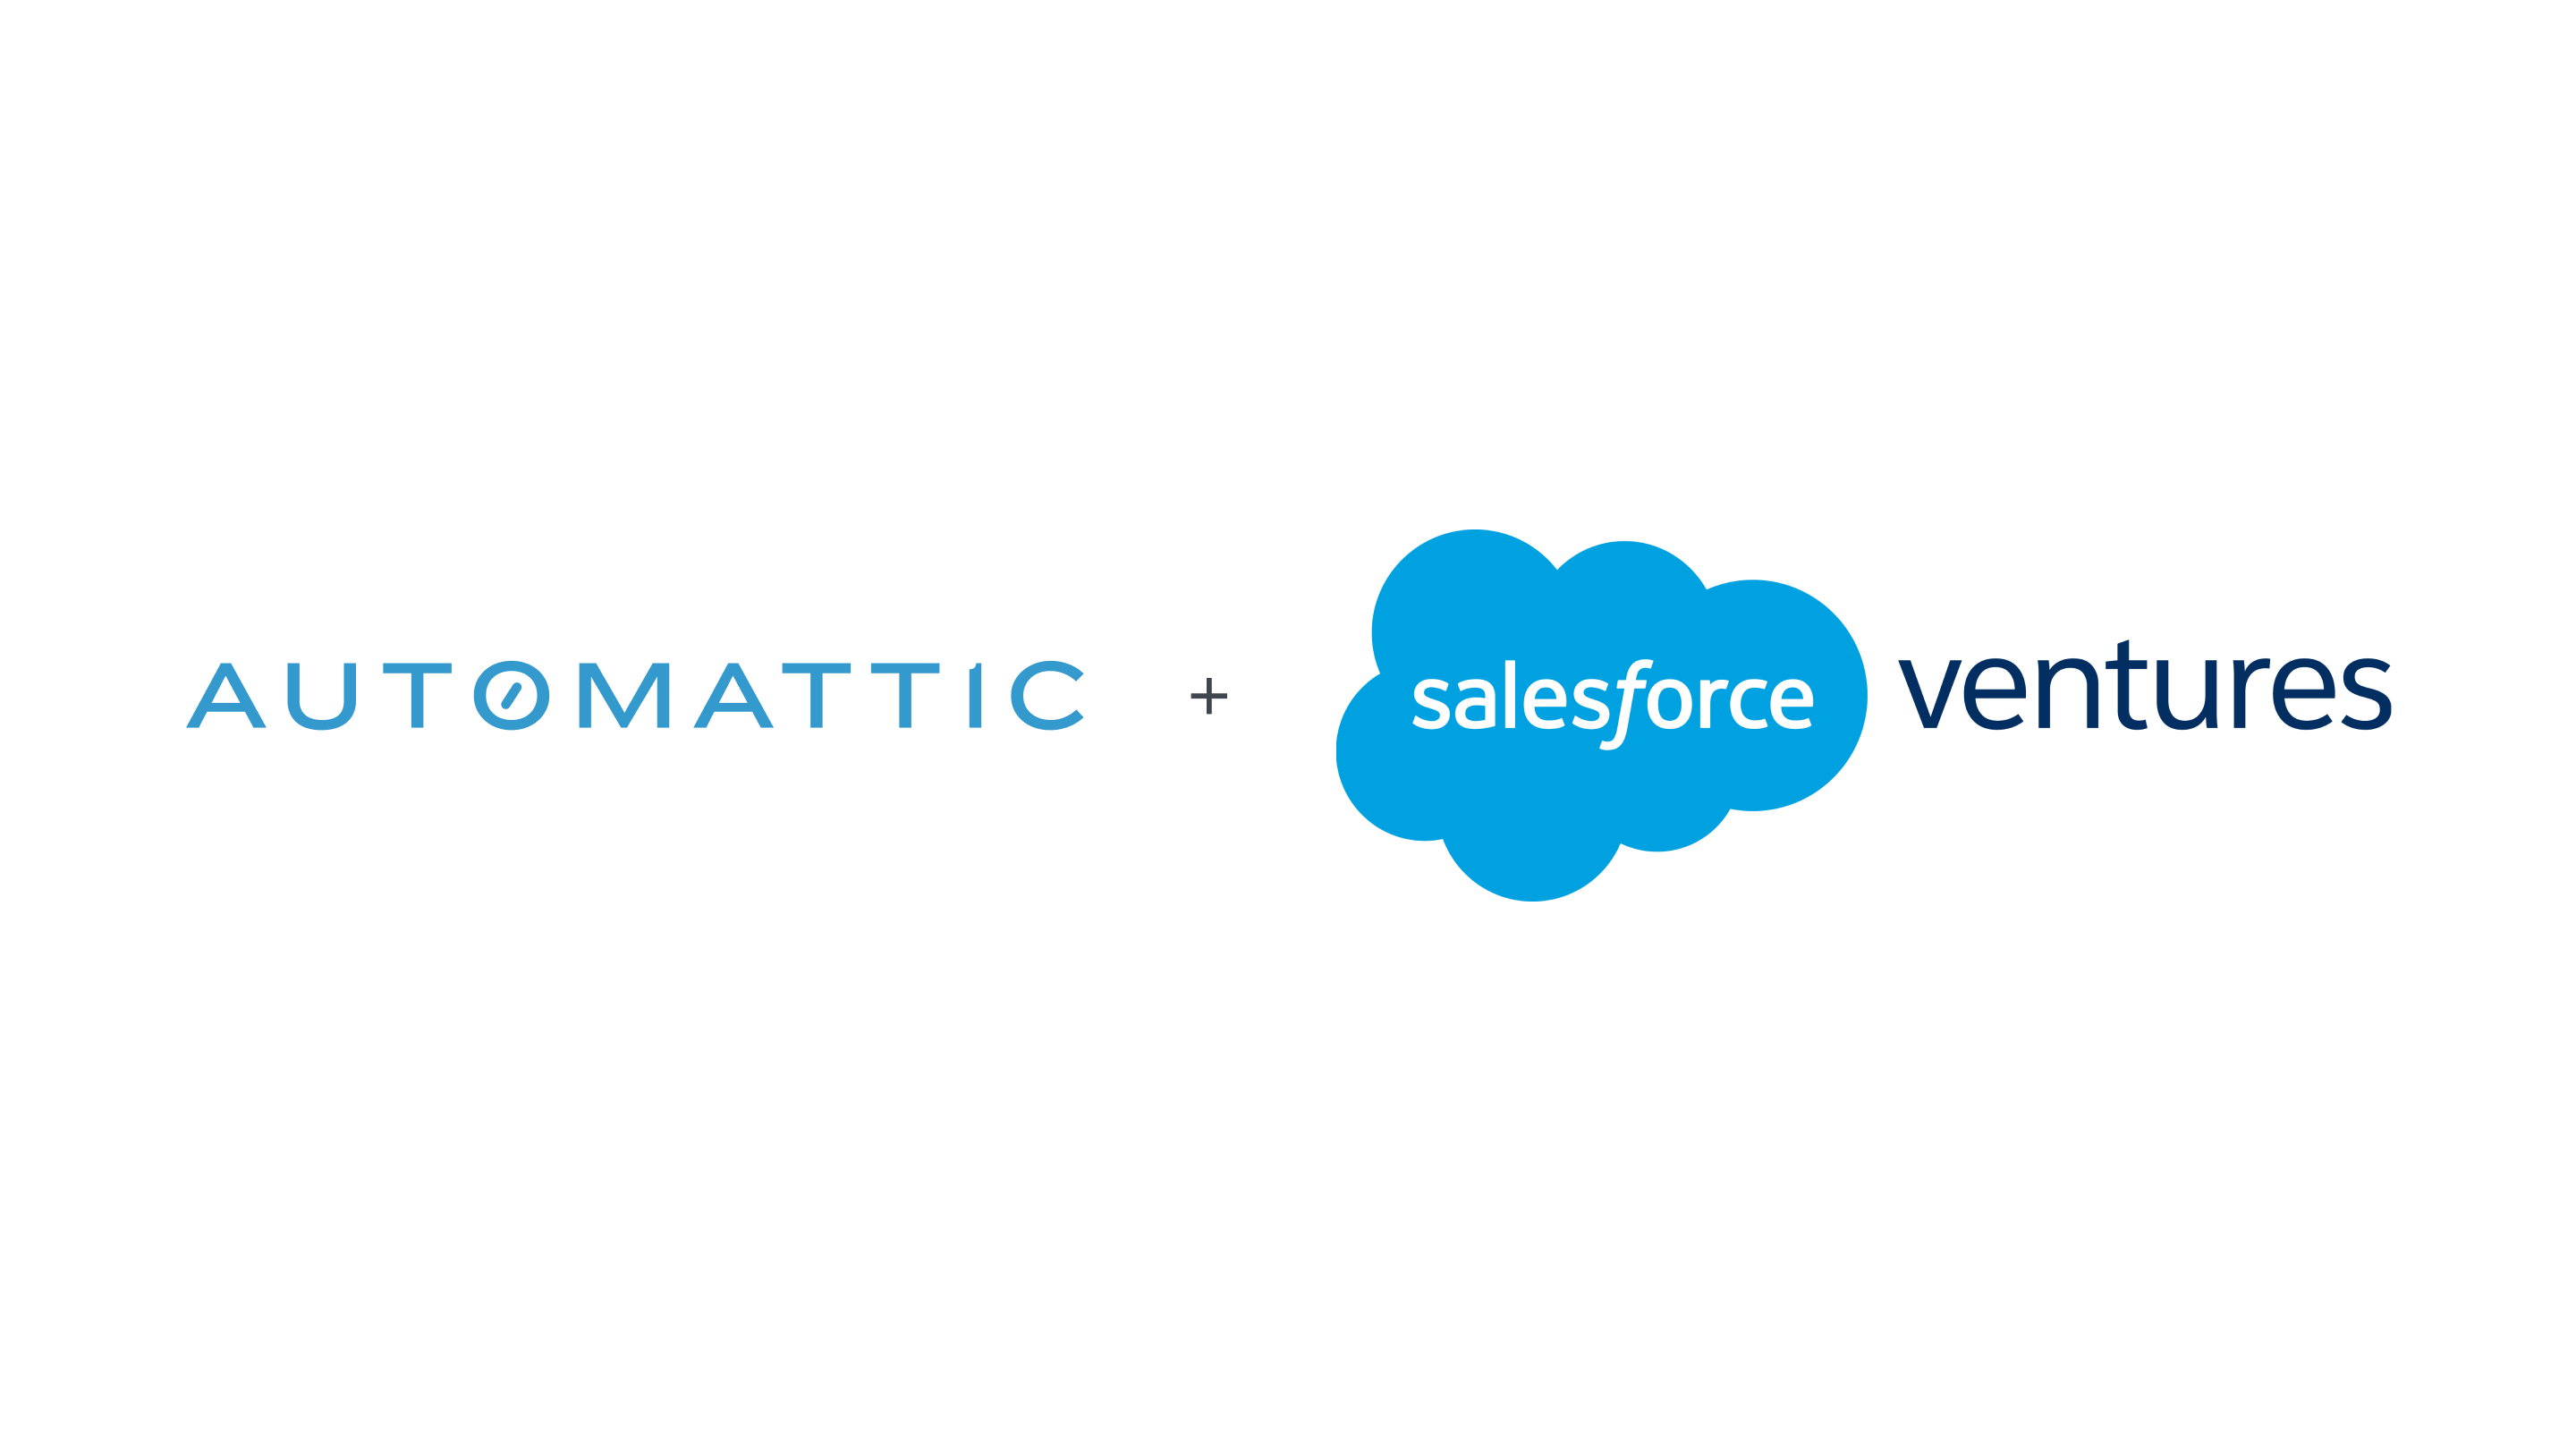 Salesforce Ventures invests $300 million in Automattic, at a $3 billion valuation